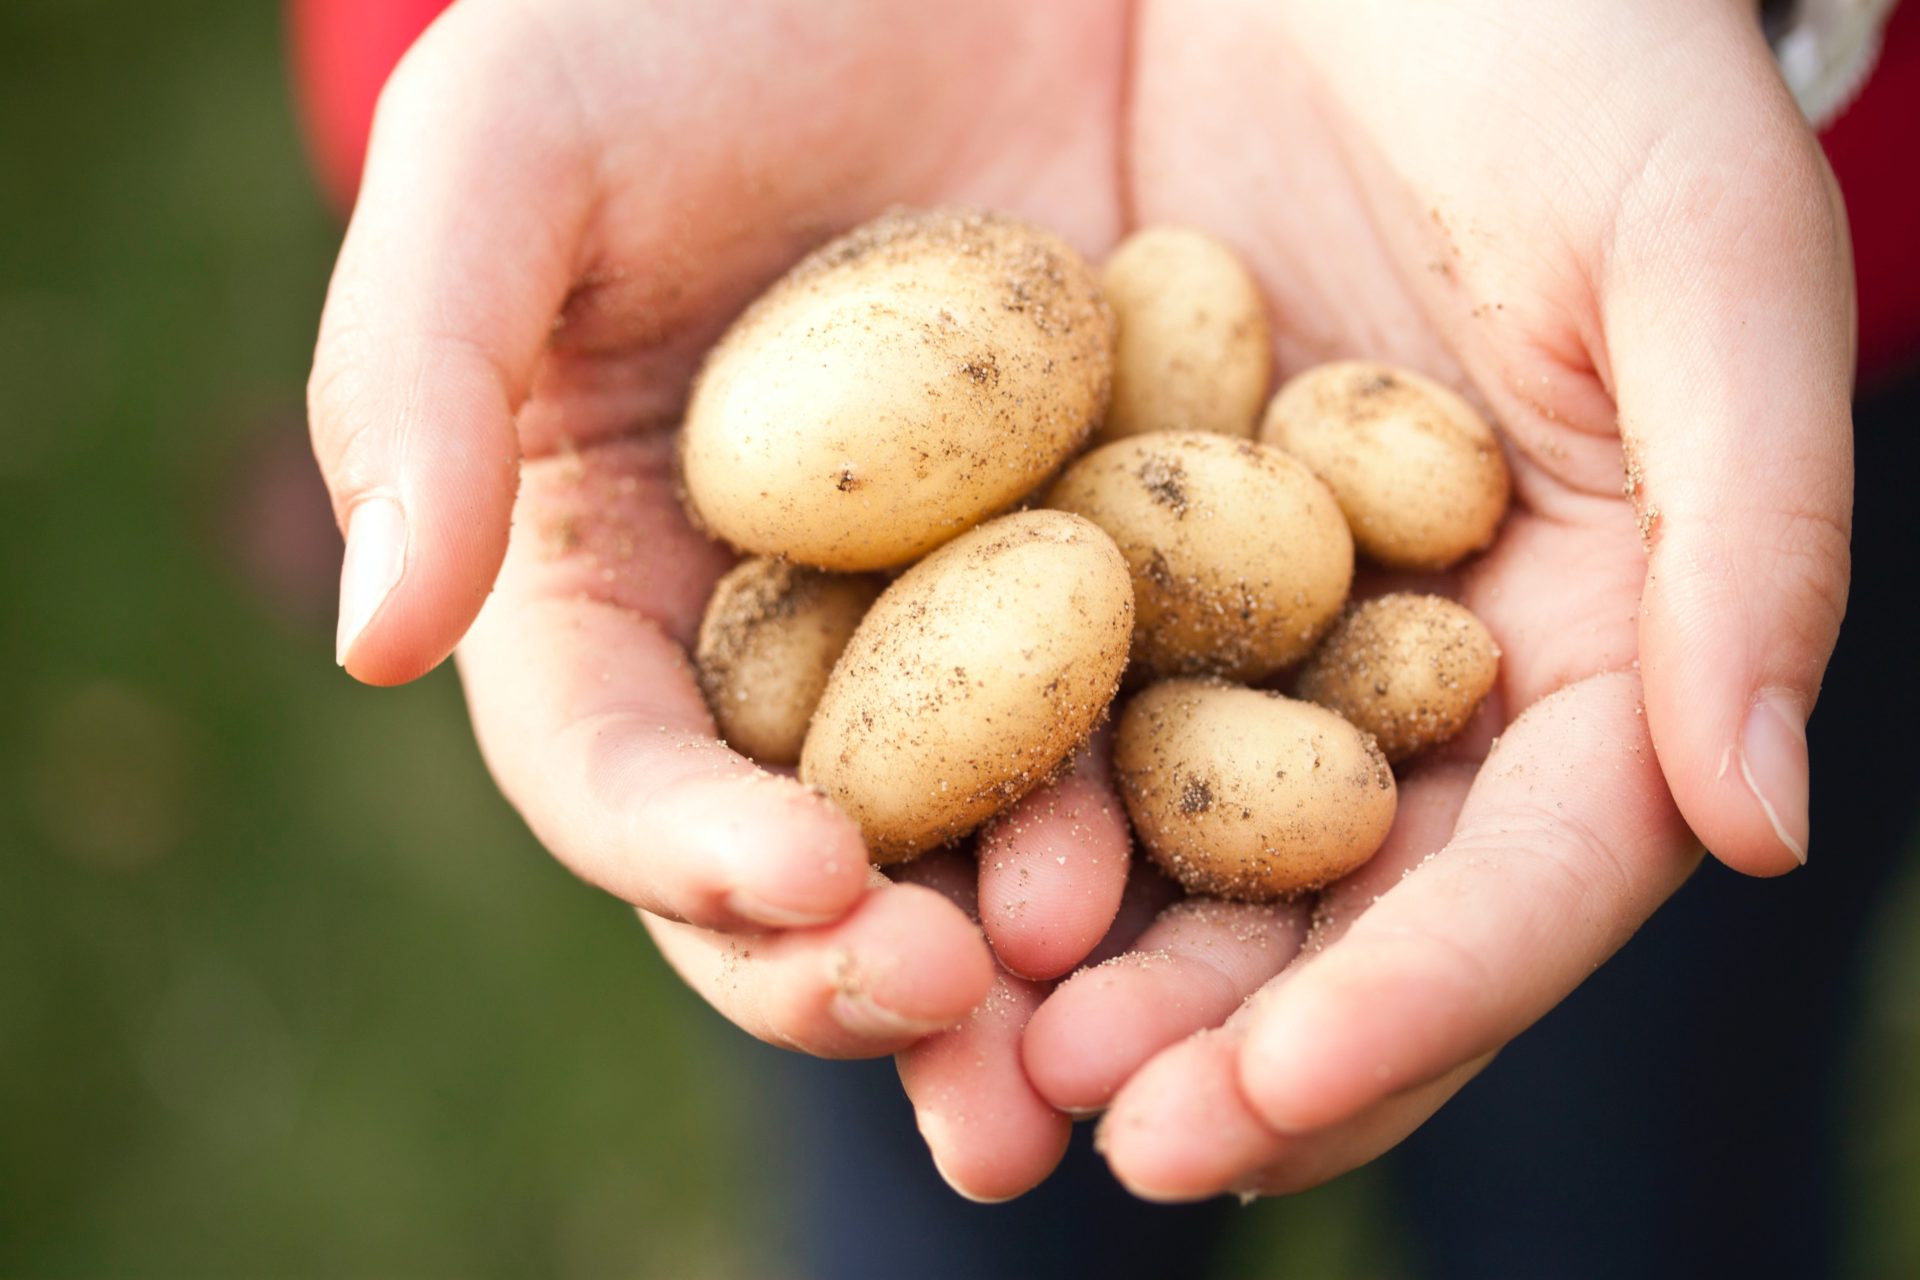 Hands holding fingerling potatoes.